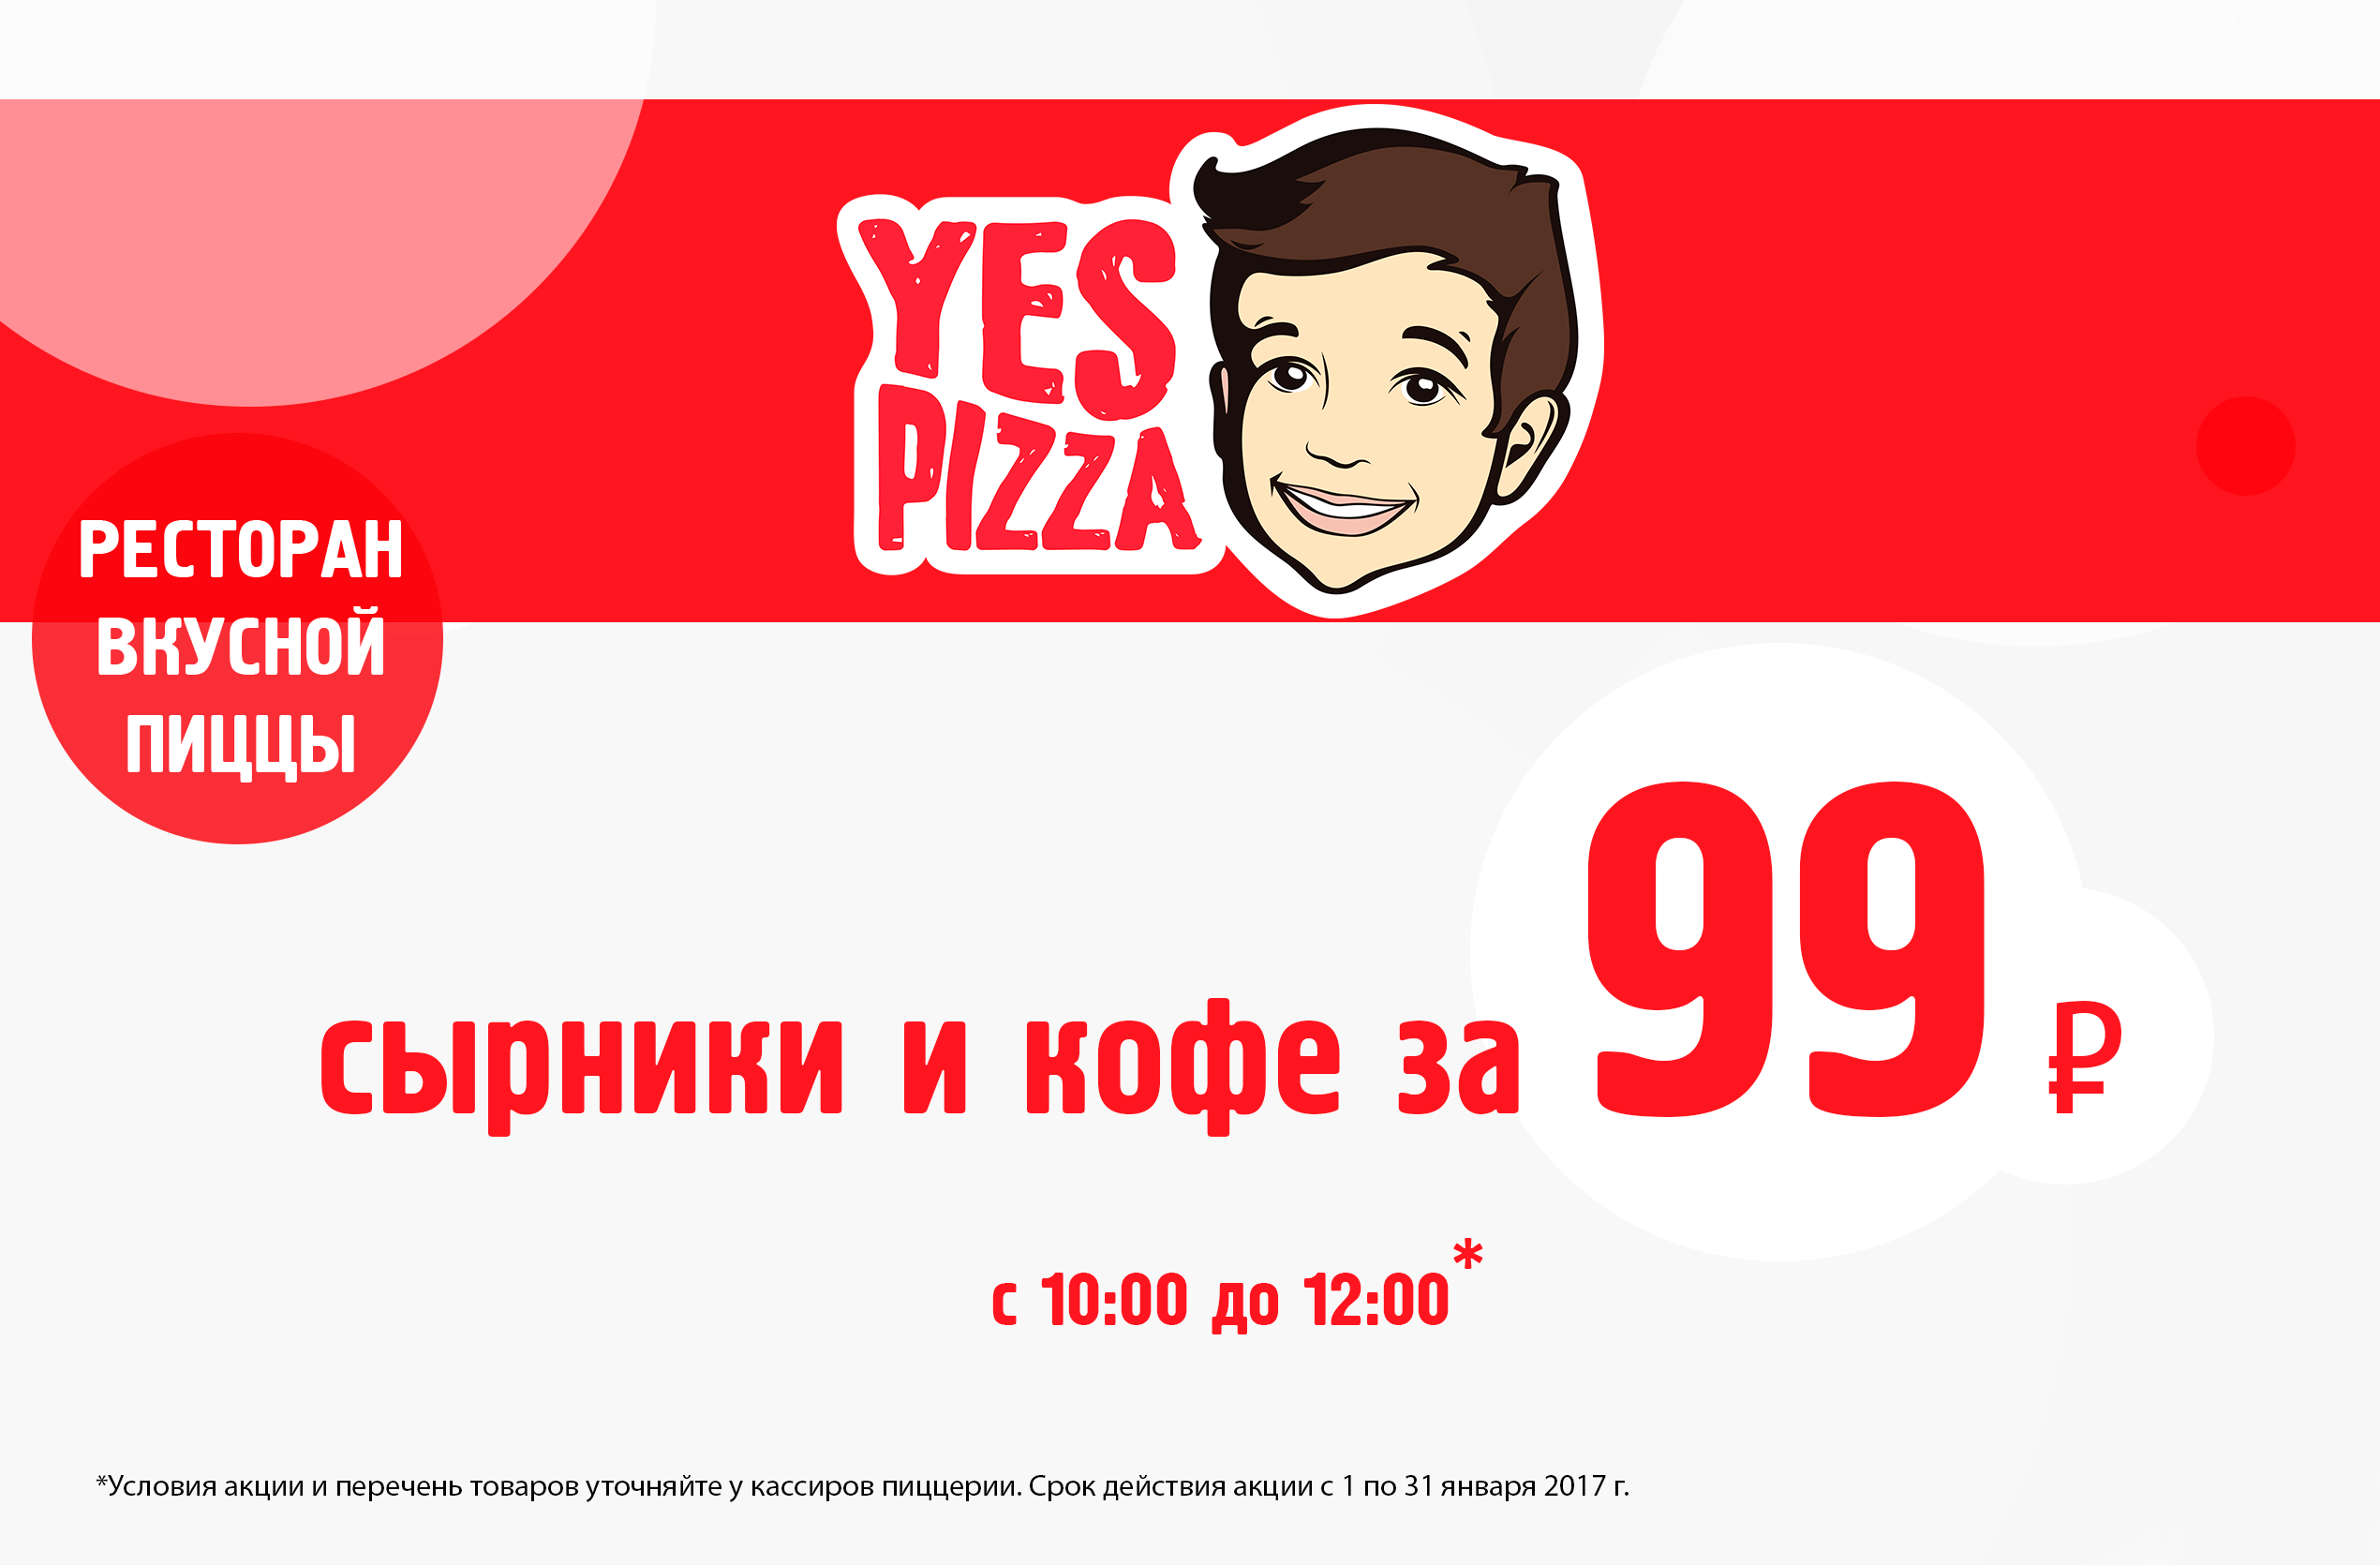 Yes!Pizza, сырники и кофе за 99 ₽